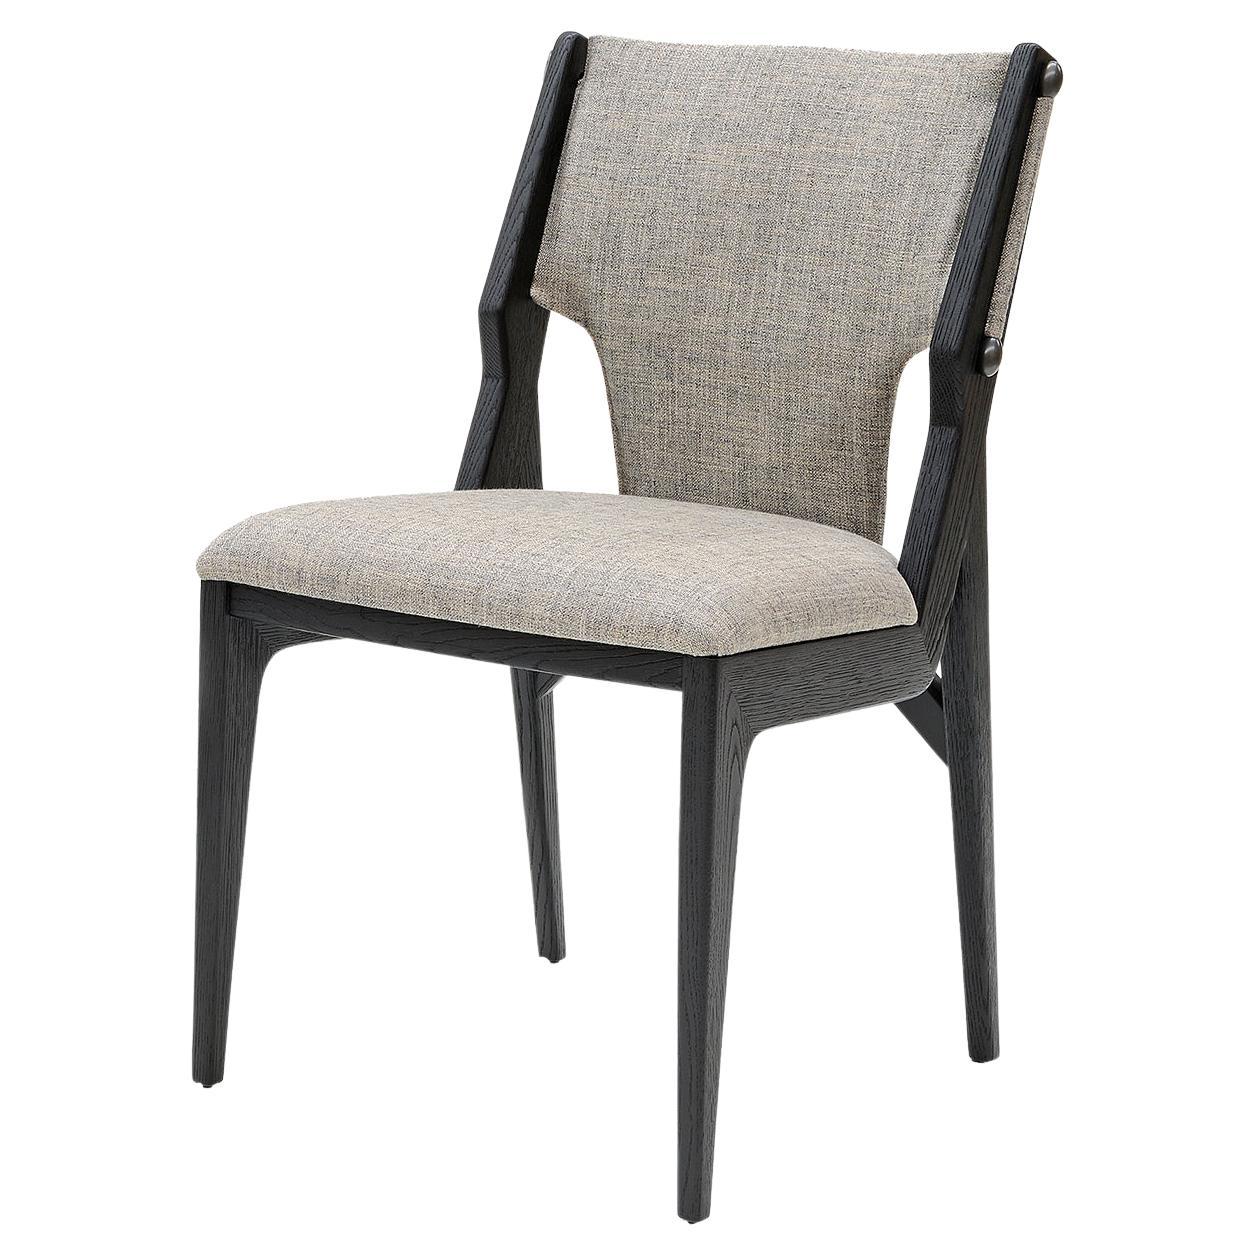 Hergon Chair